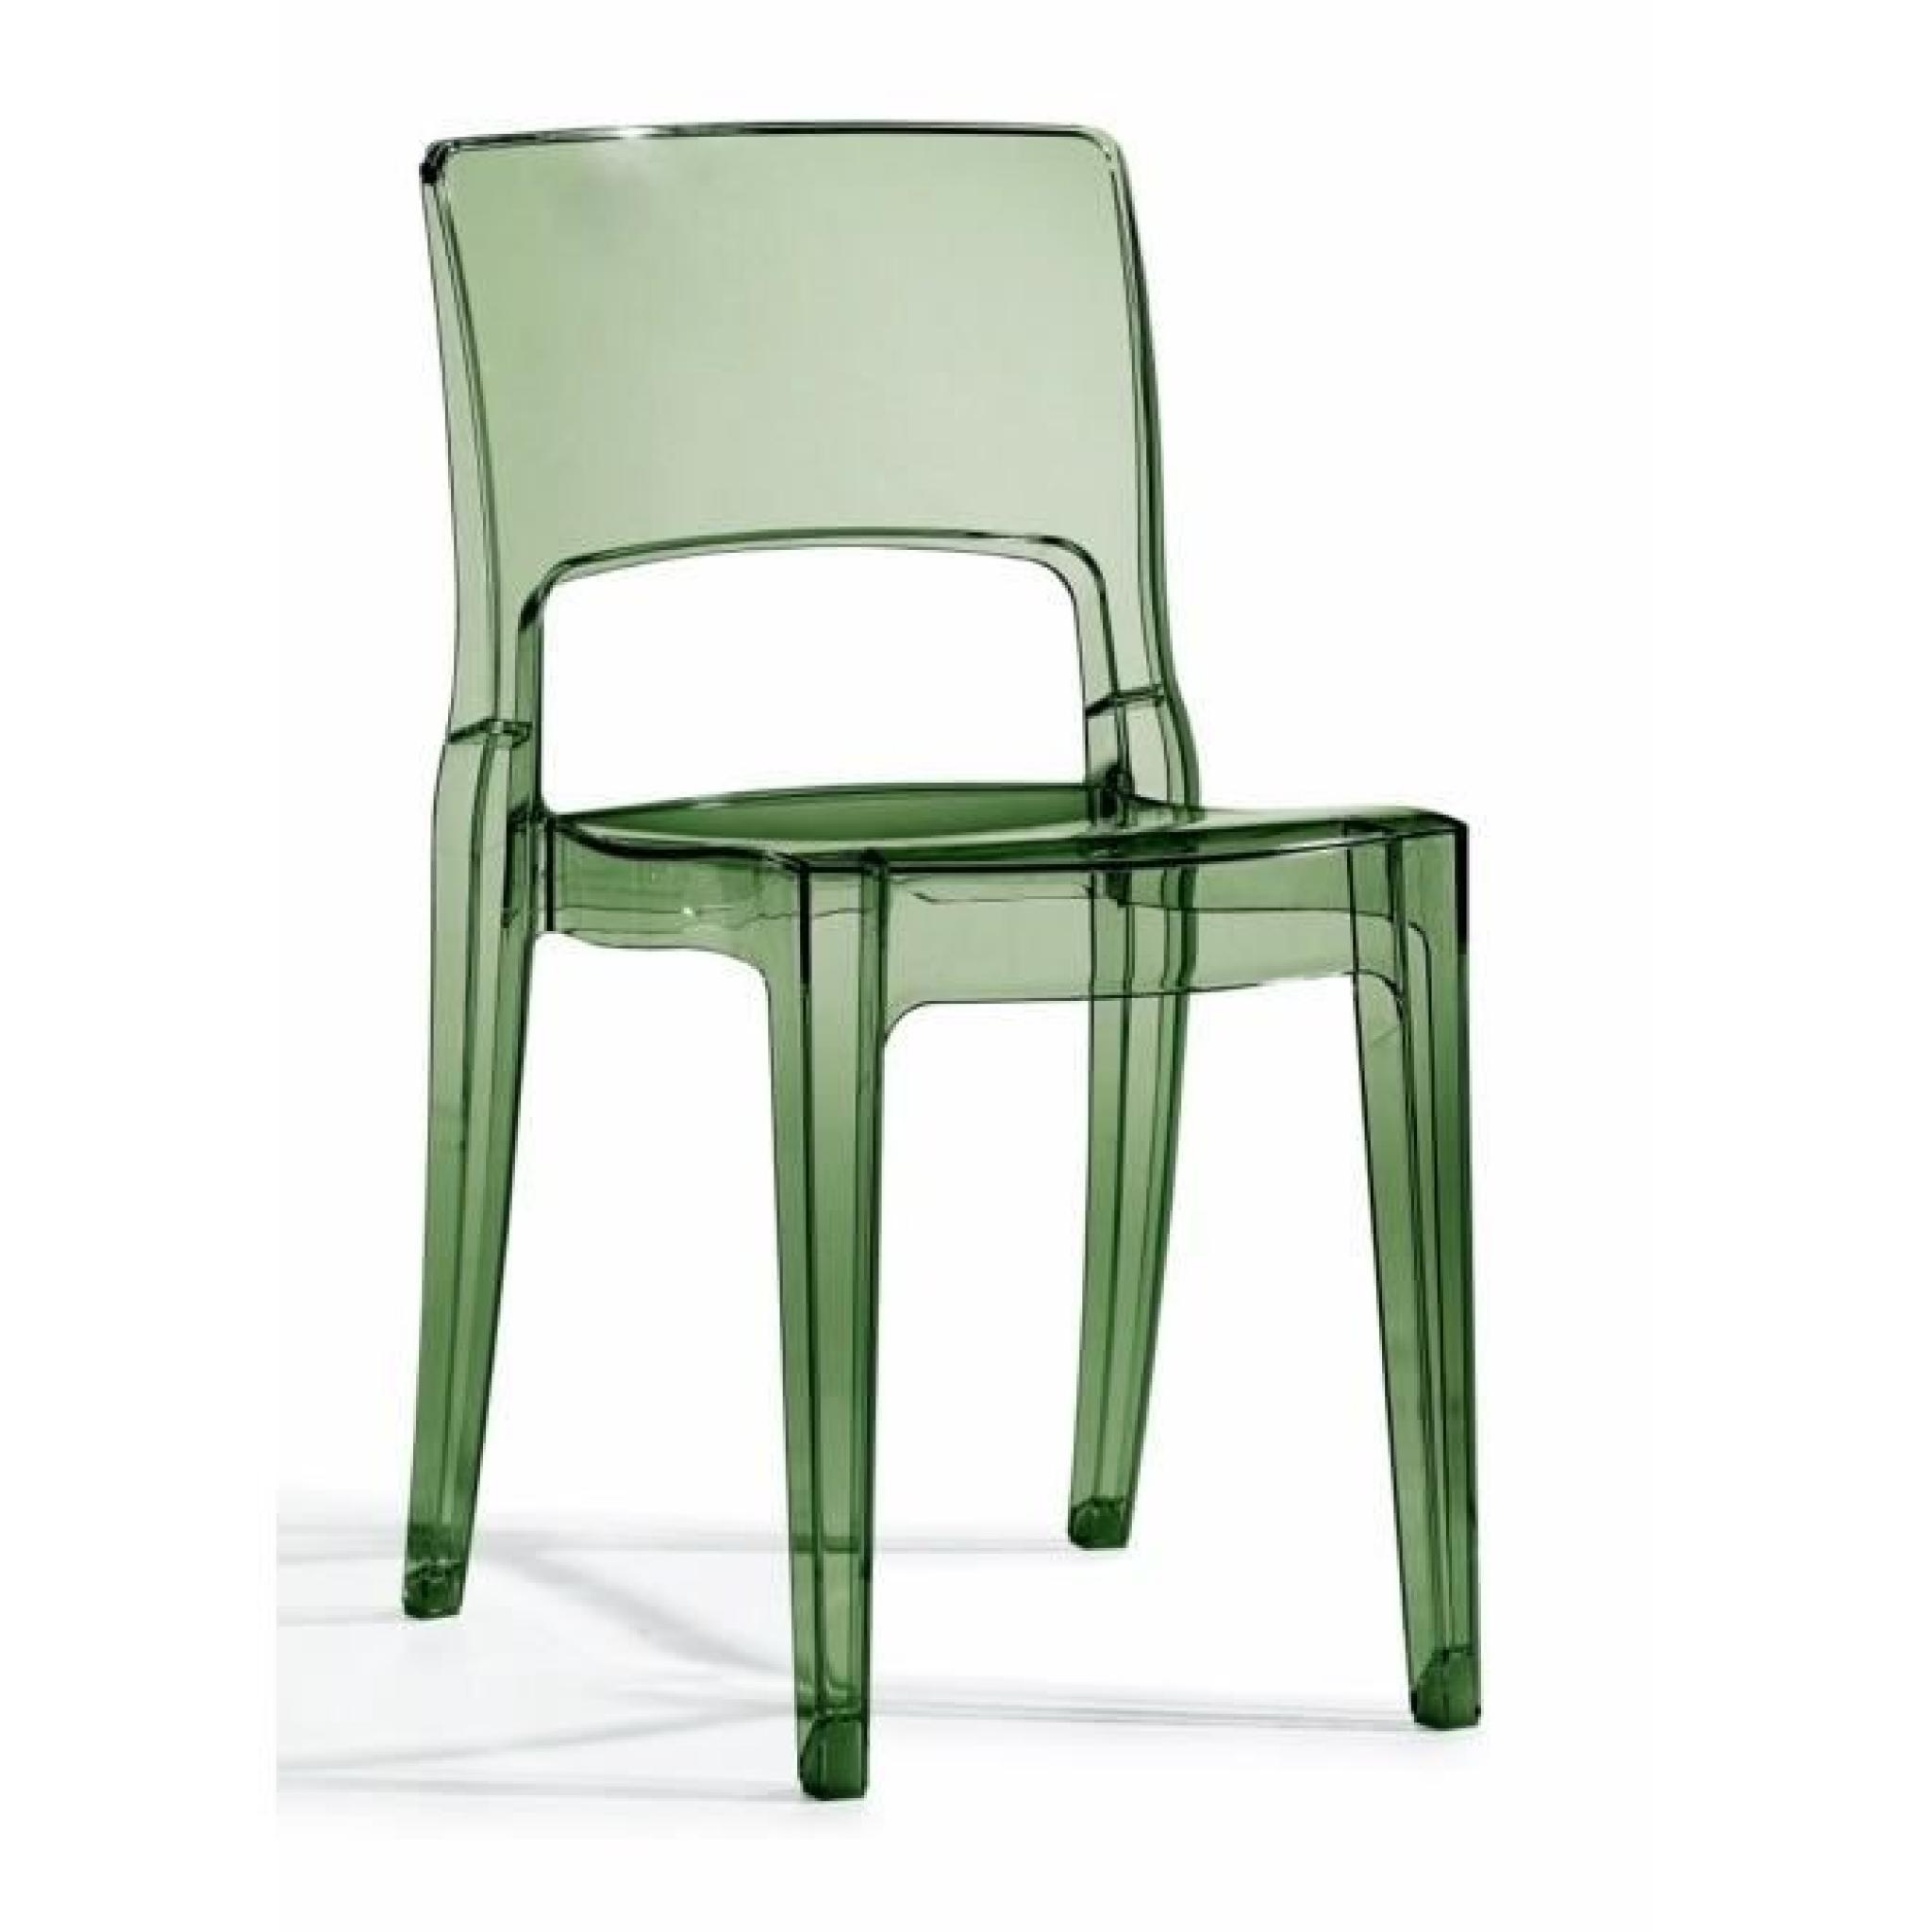 Chaise grise transparente design - Isy Antishock grise transparente - deco scab